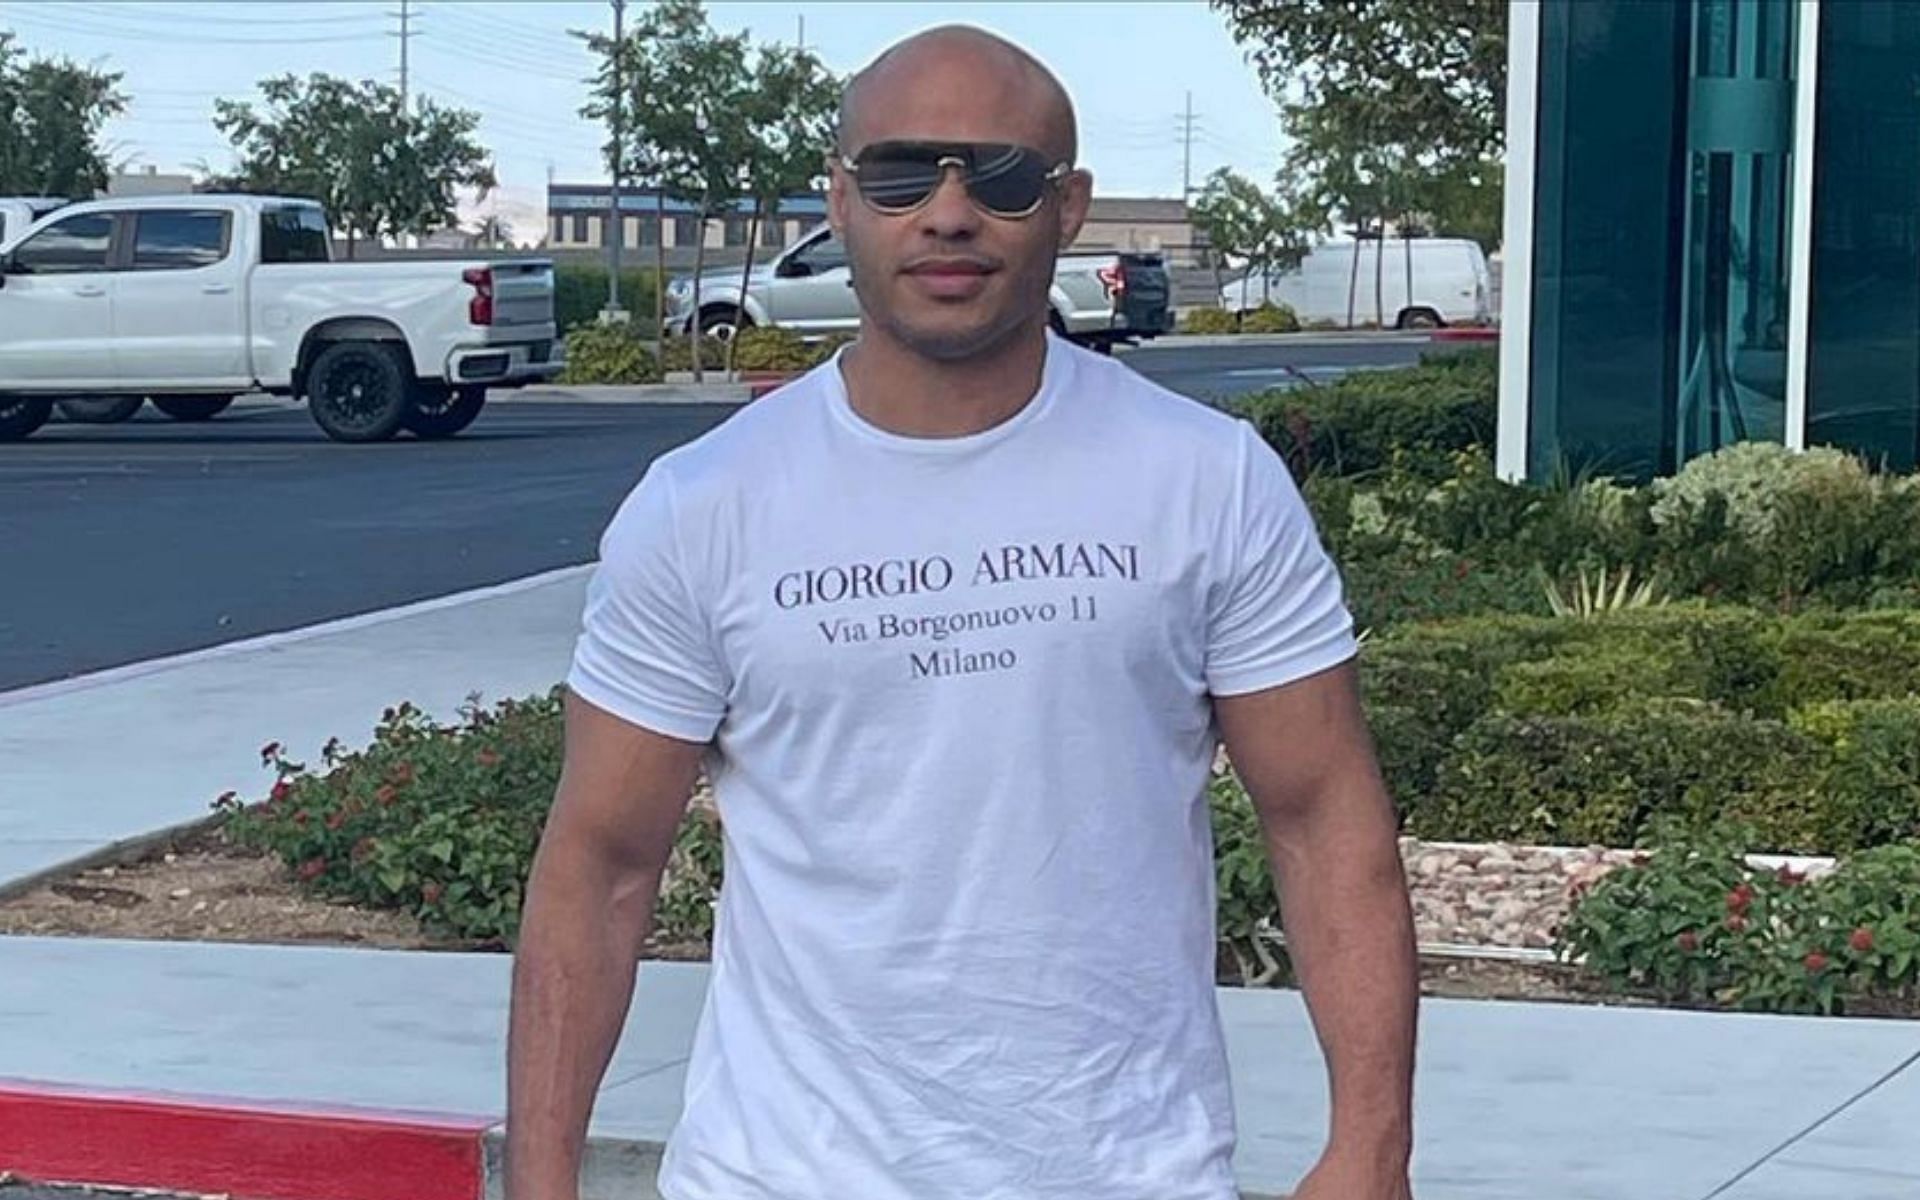 Founder and president of Dominance MMA Management, Ali Abdelaziz via Instagram.